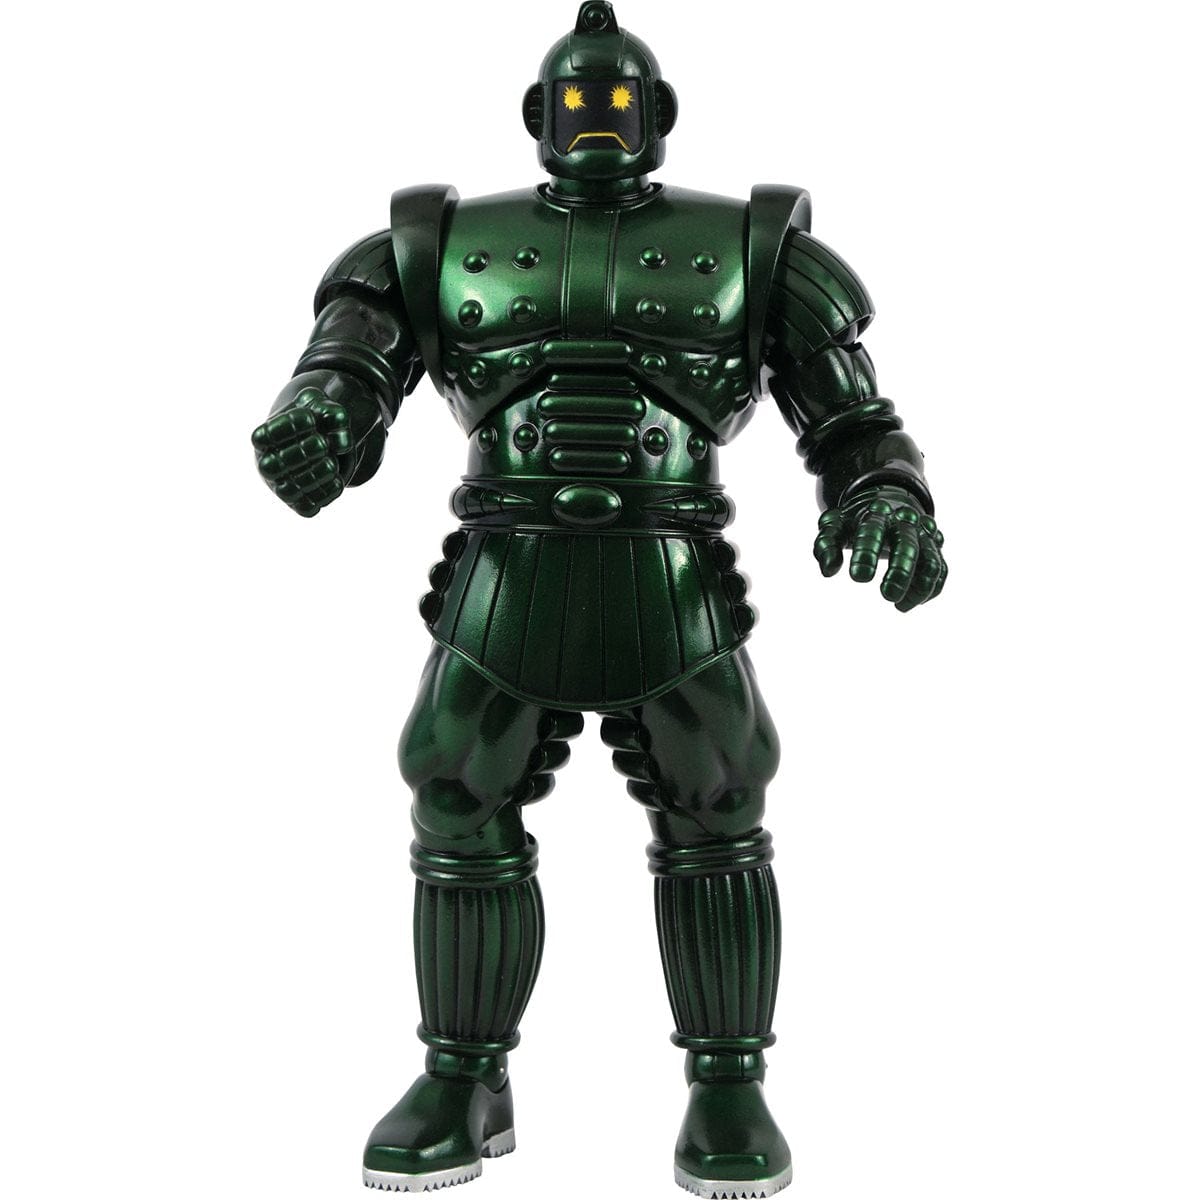 Diamond Select Toys Marvel Select Titanium Man Action Figure